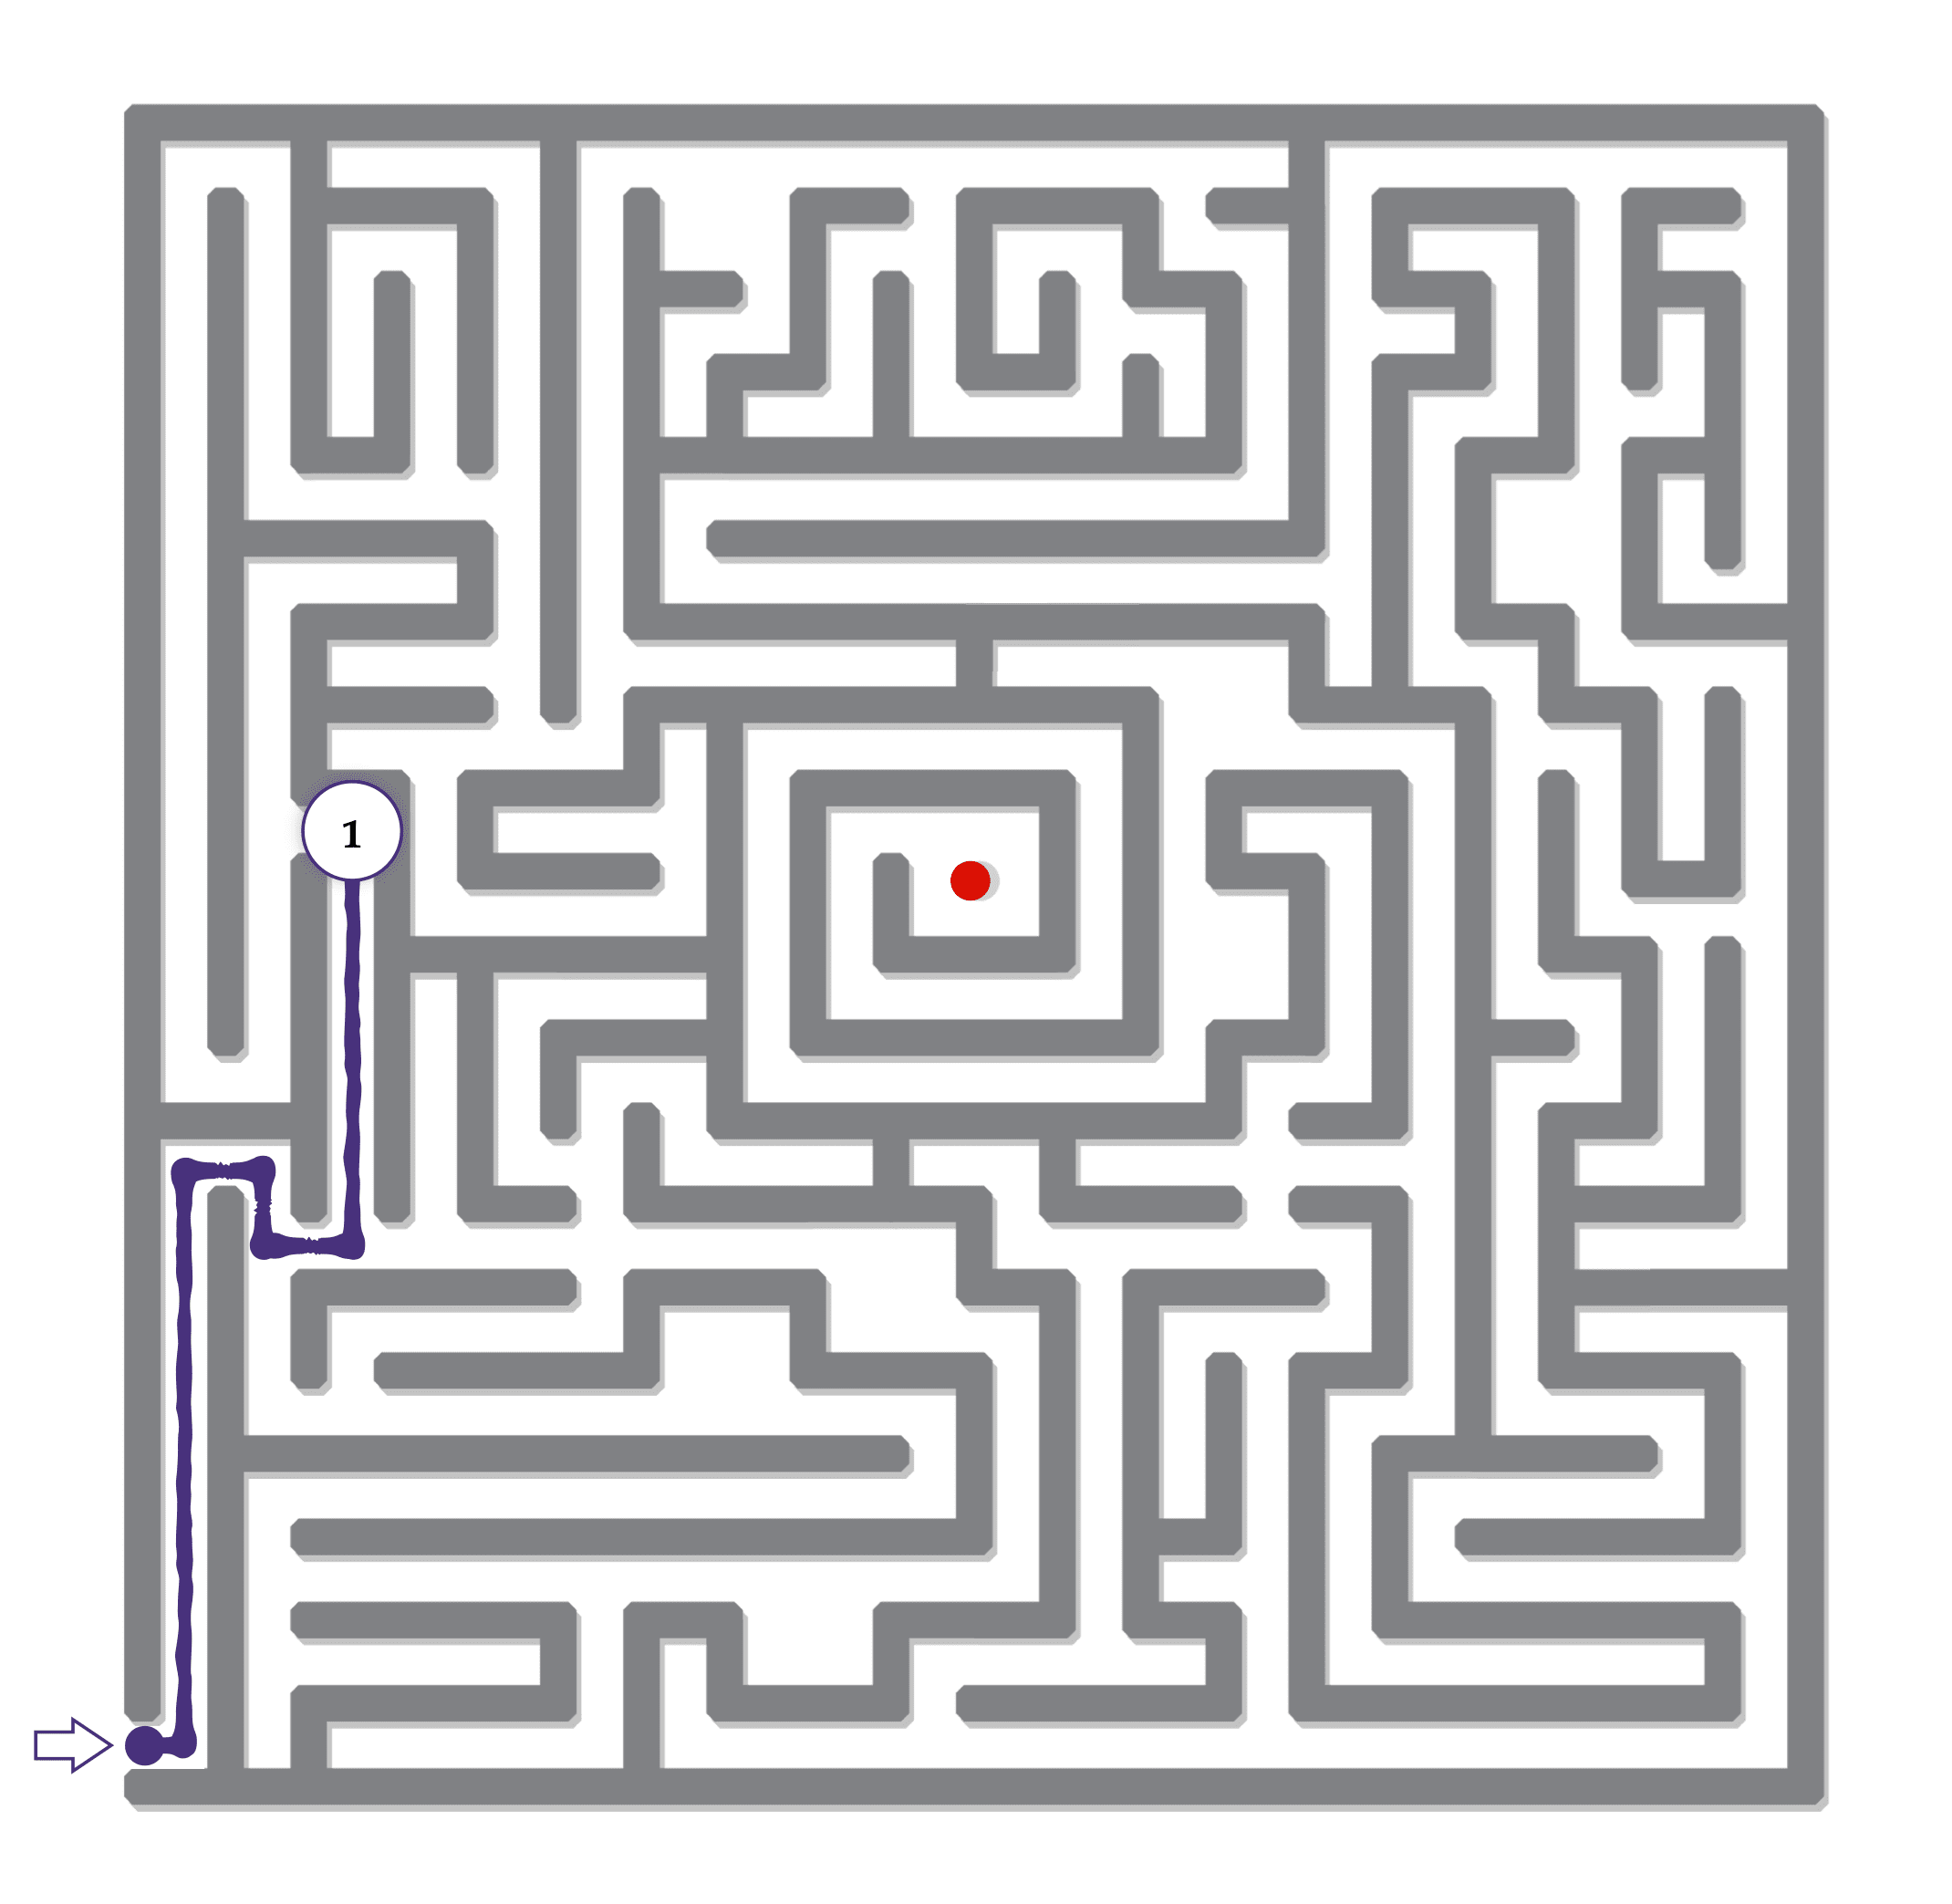 5345220 Maze step 1